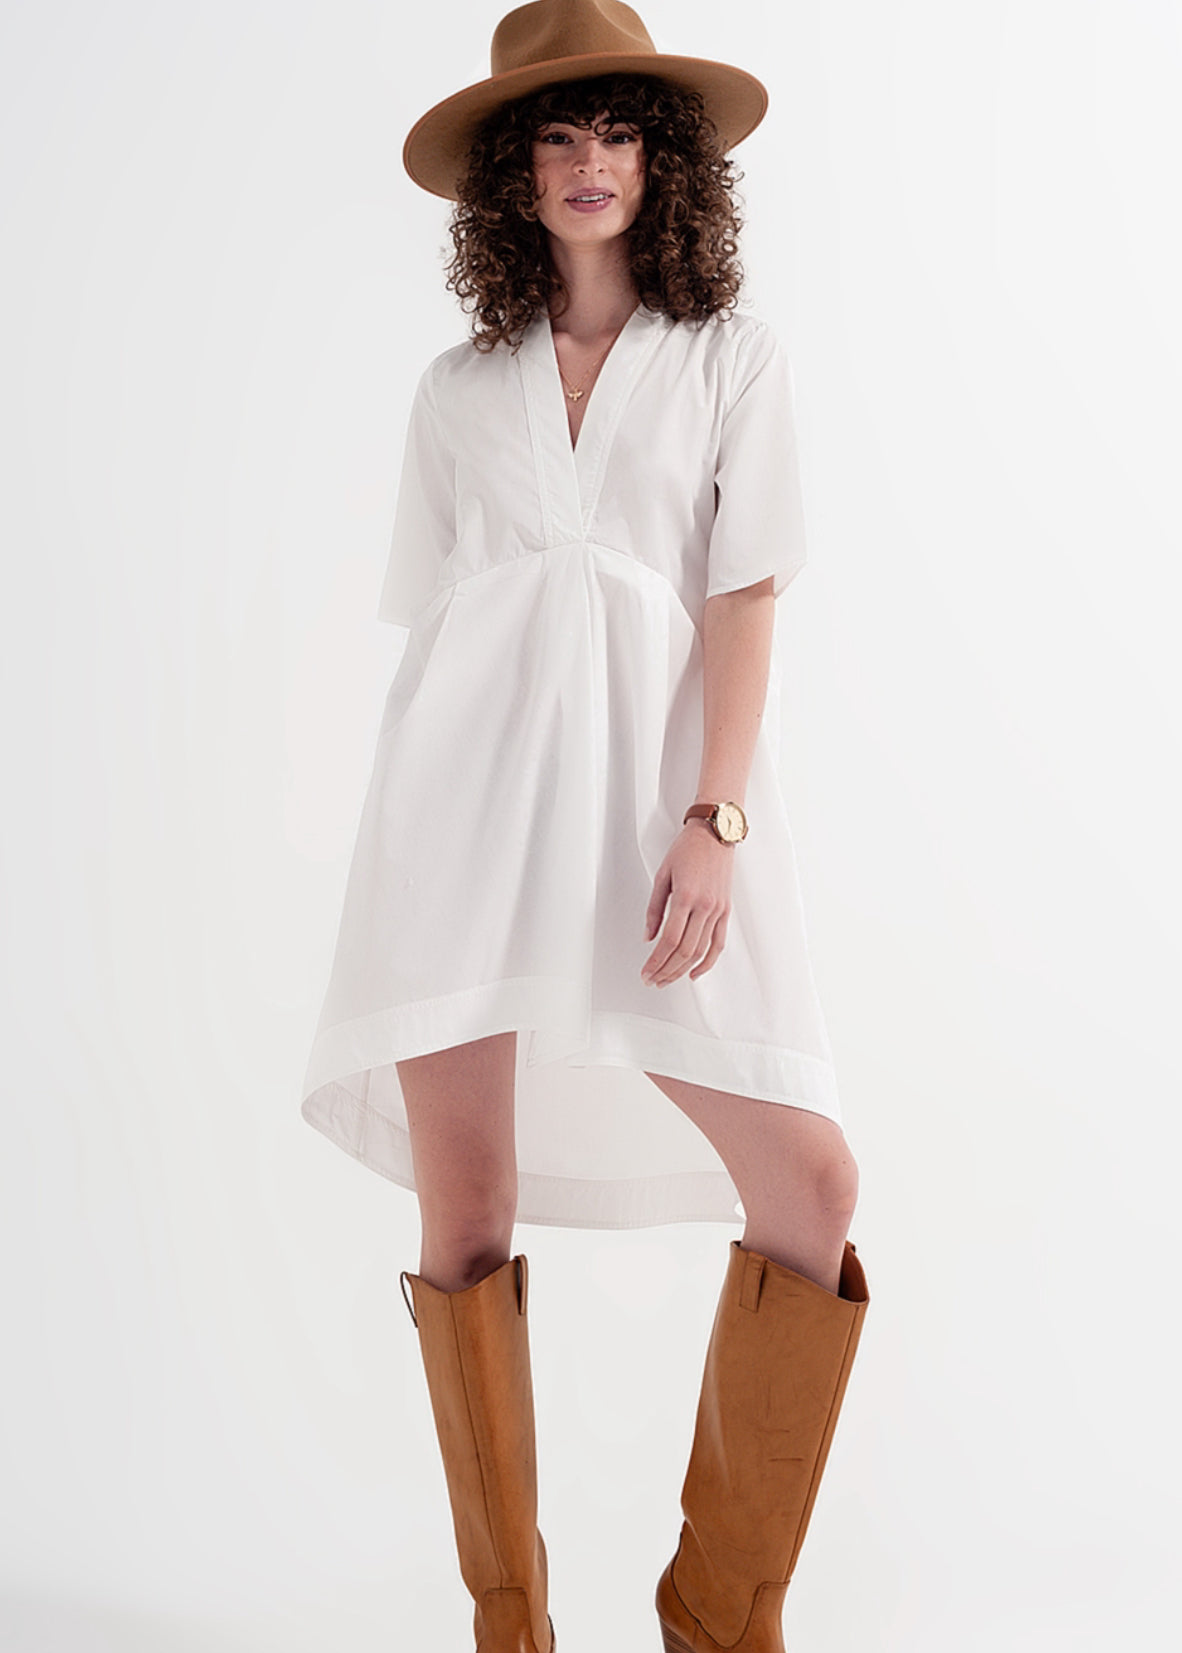 White Empire Waistline Dress - Premium variation from Tooksie - Just $39.99! Shop now at Tooksie